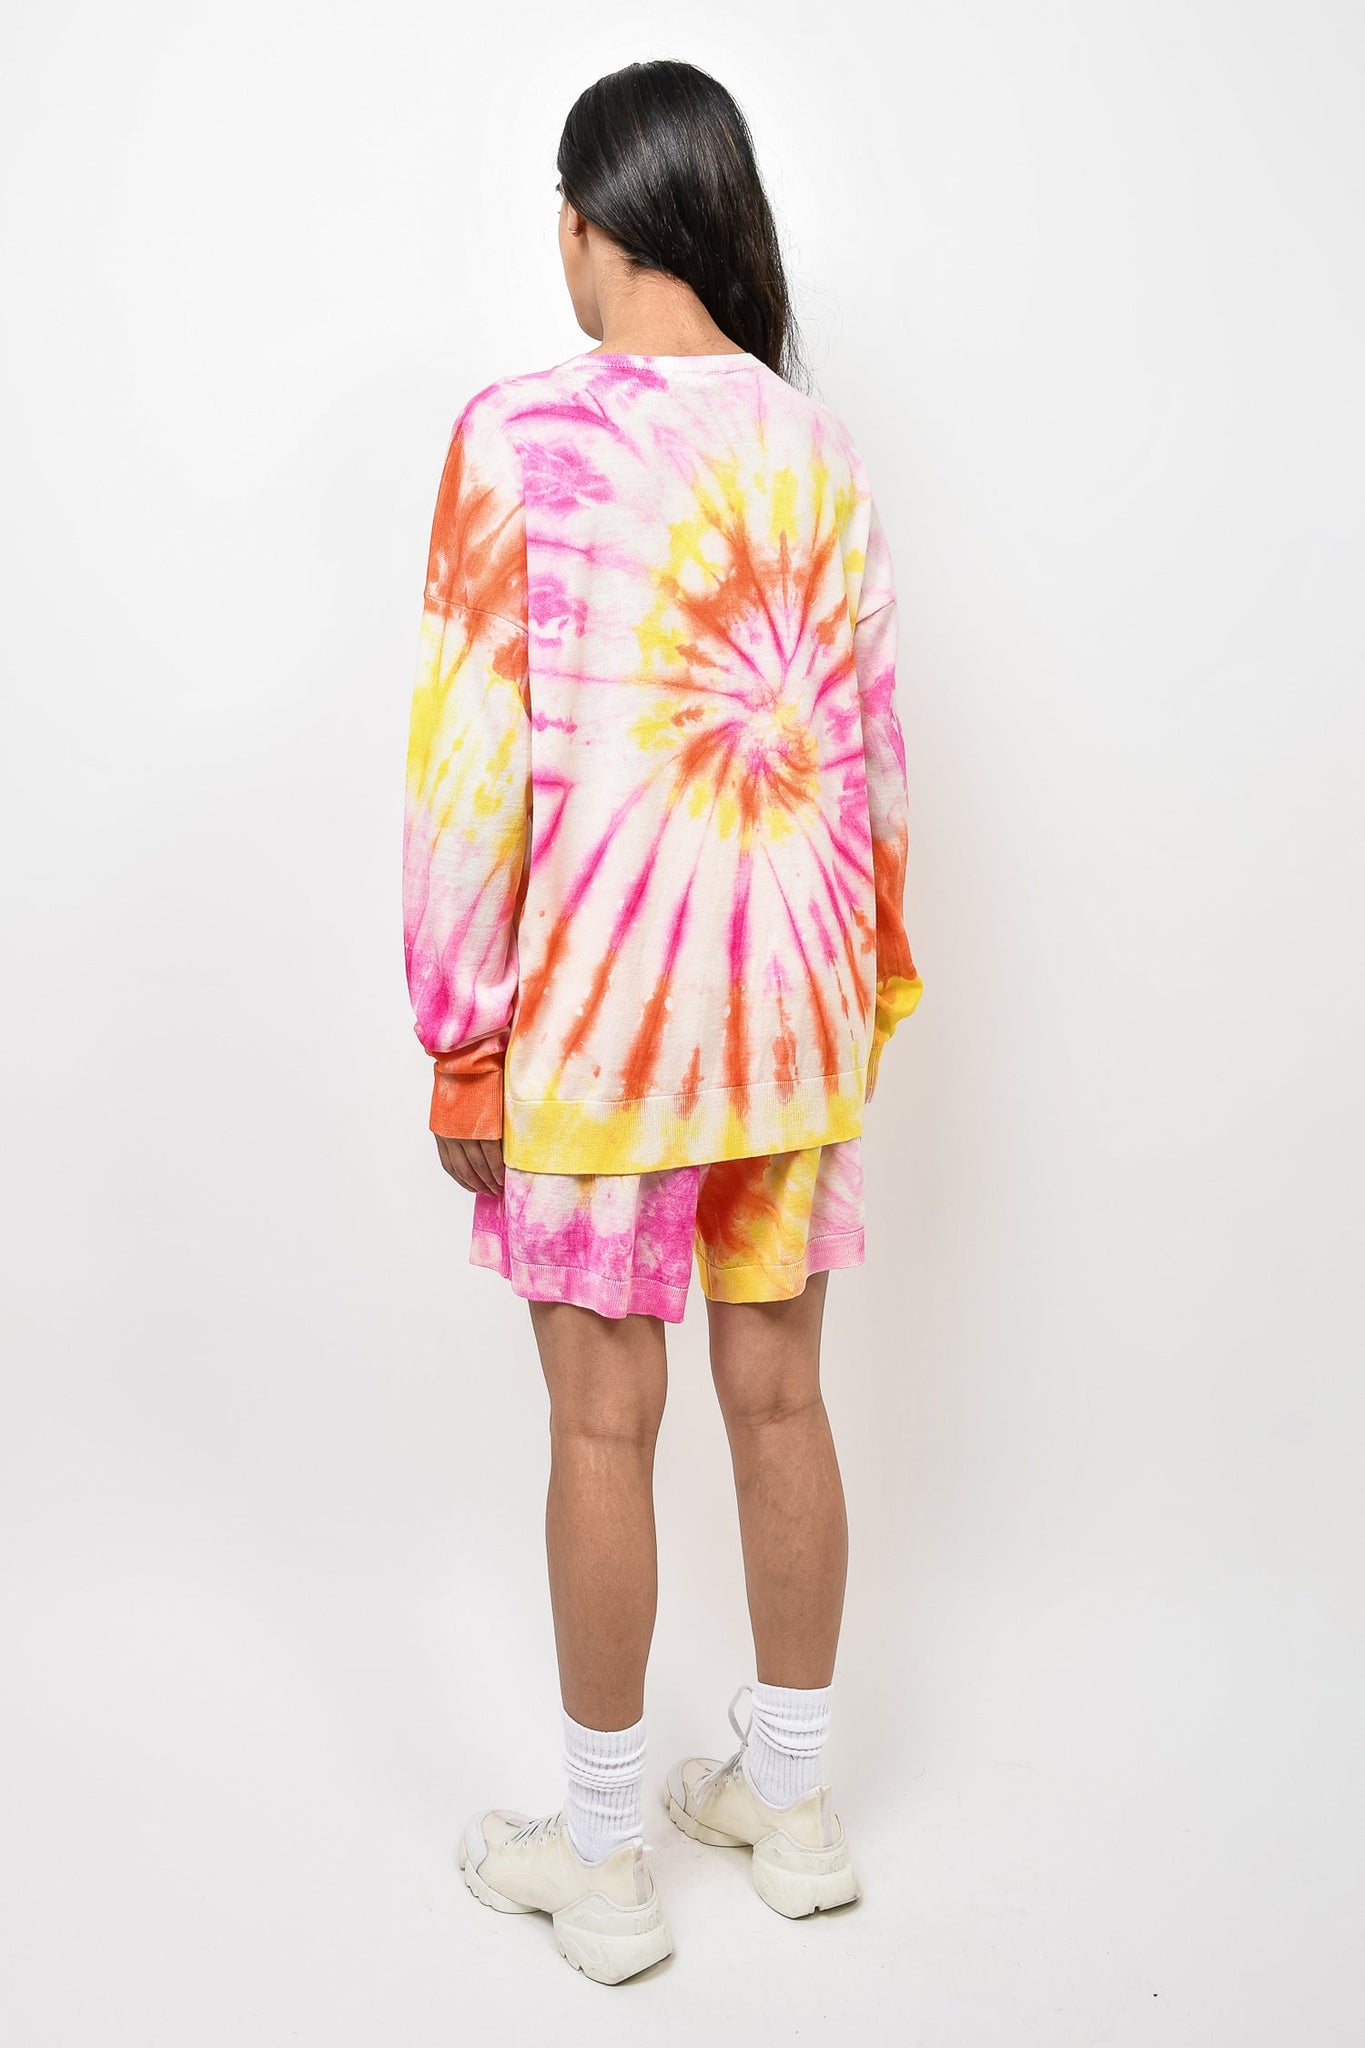 Stella McCartney Pink/Yellow Tie Dye Top Size 46 + Matching Shorts Set Size 38